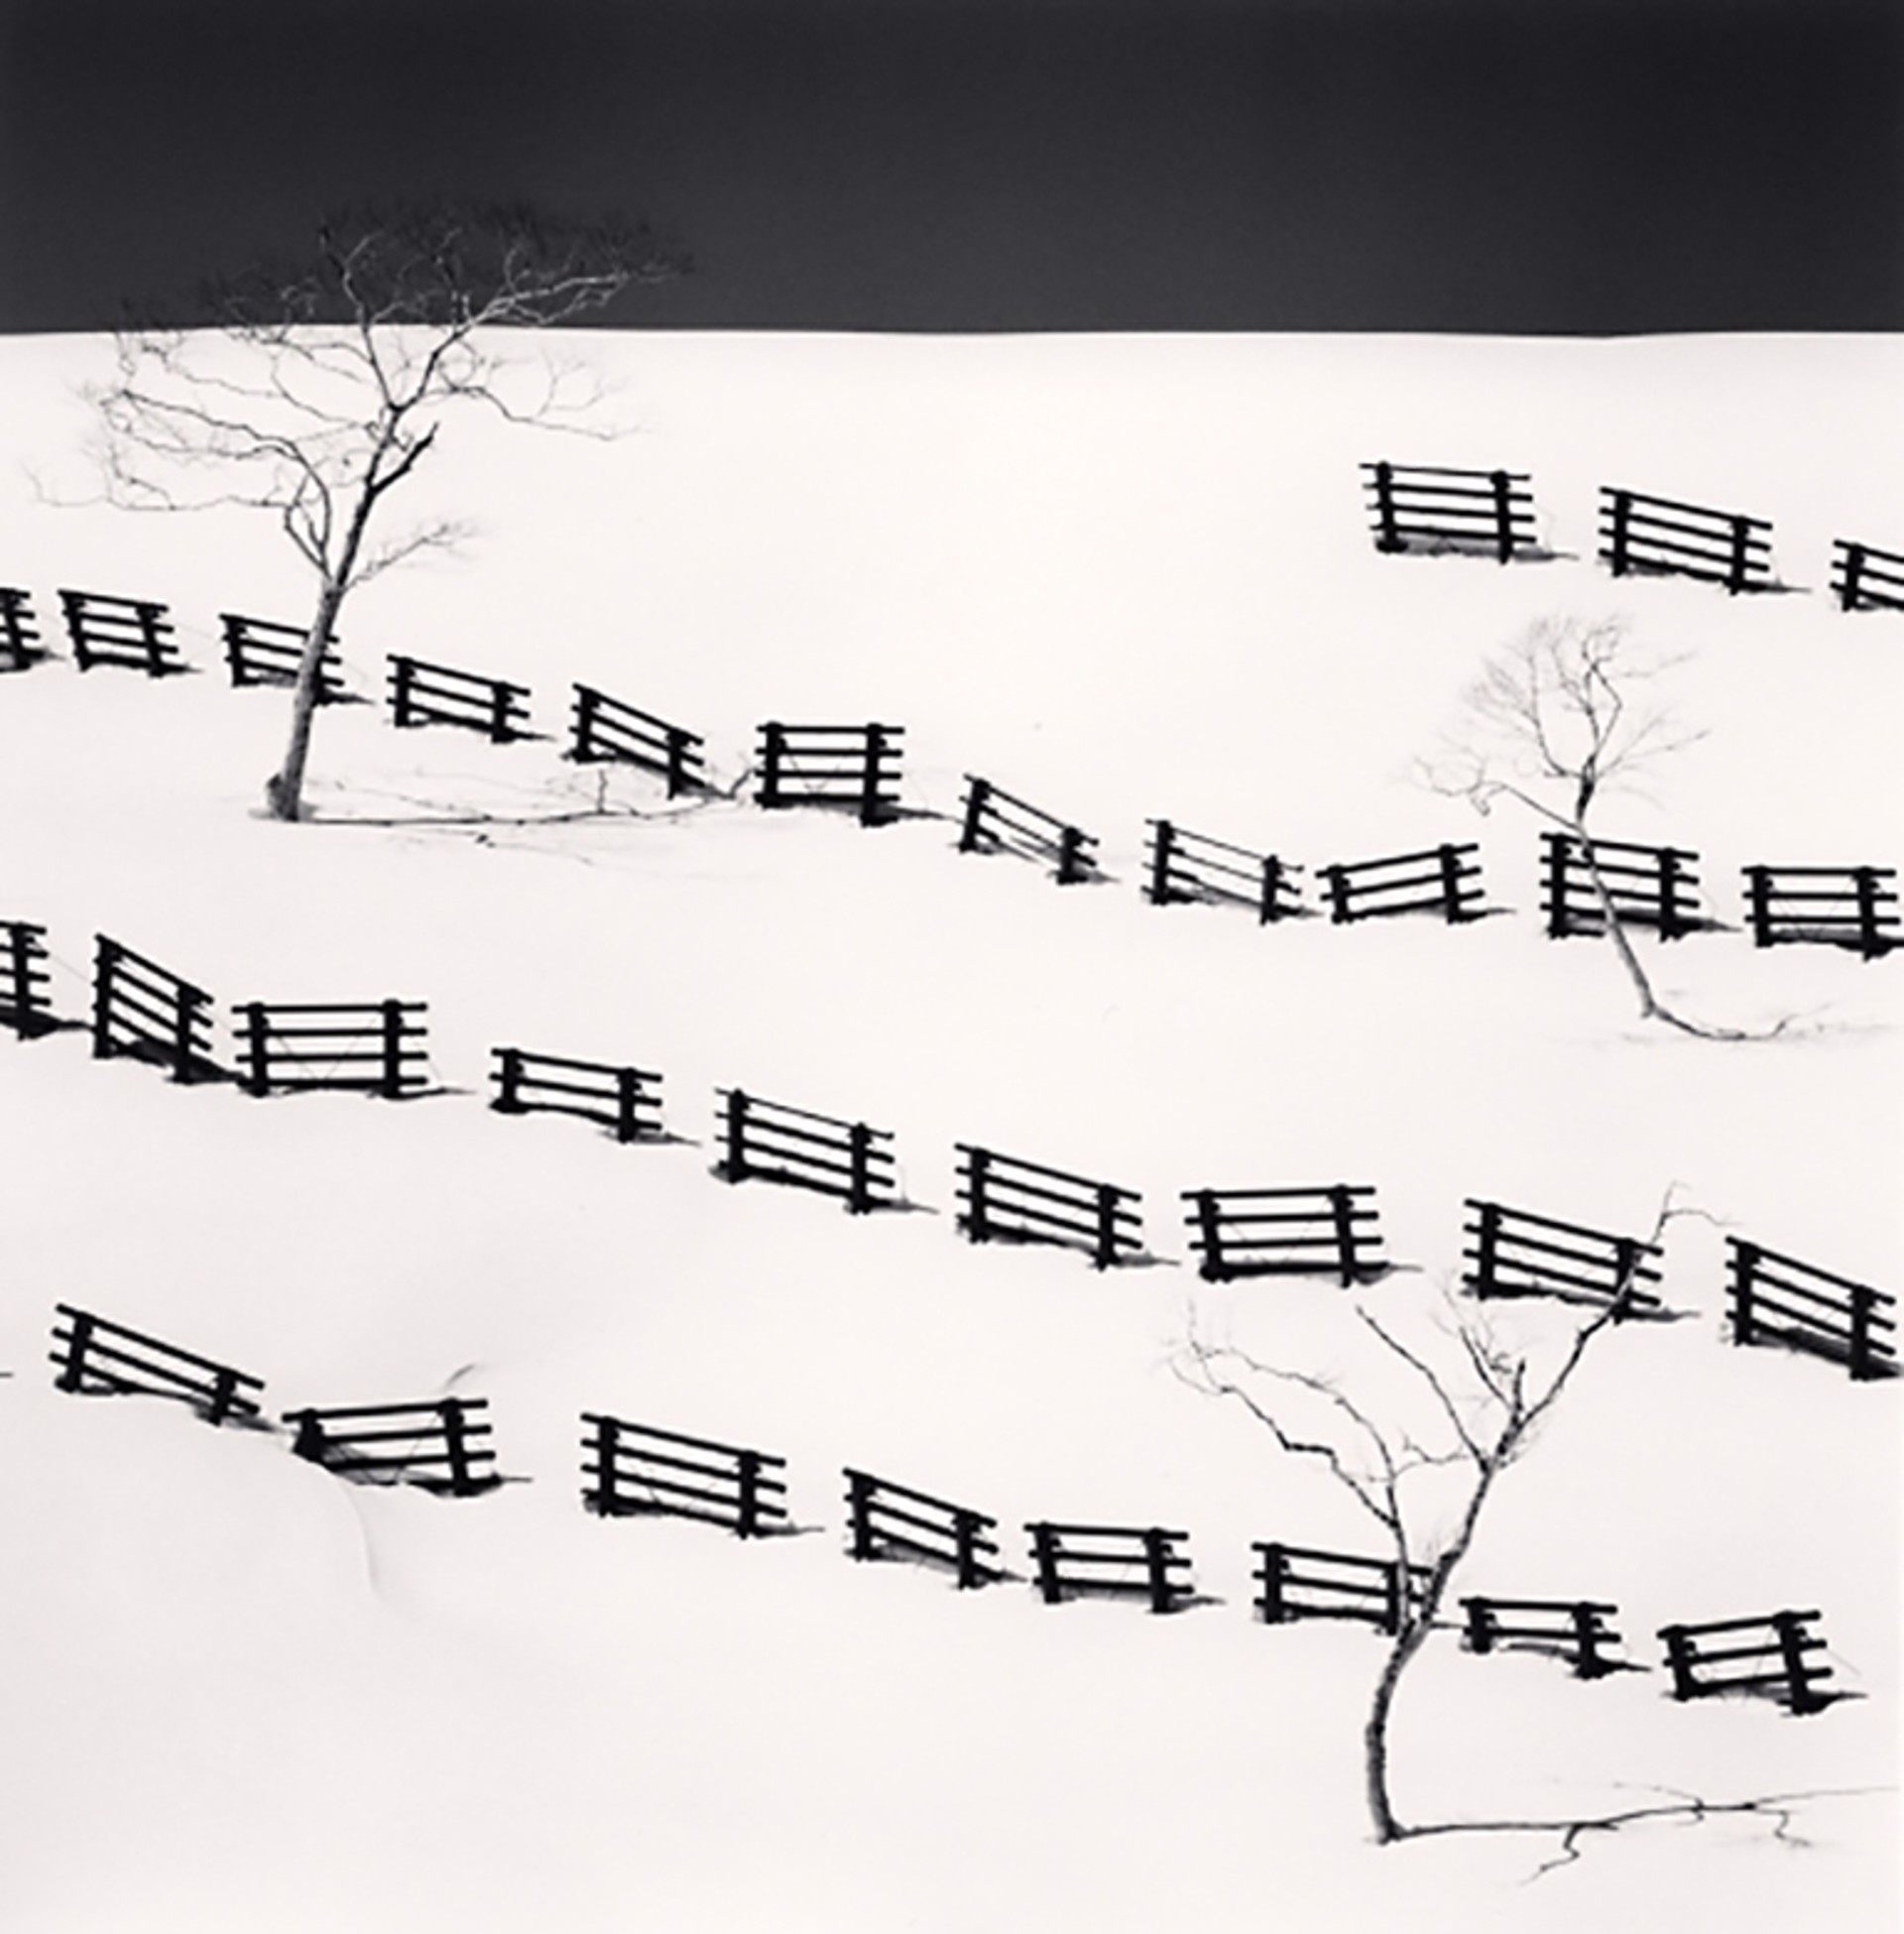 Thirty One Snow Fences, Bihoro, Hokkaido, Japan (edition of 25) by Michael Kenna